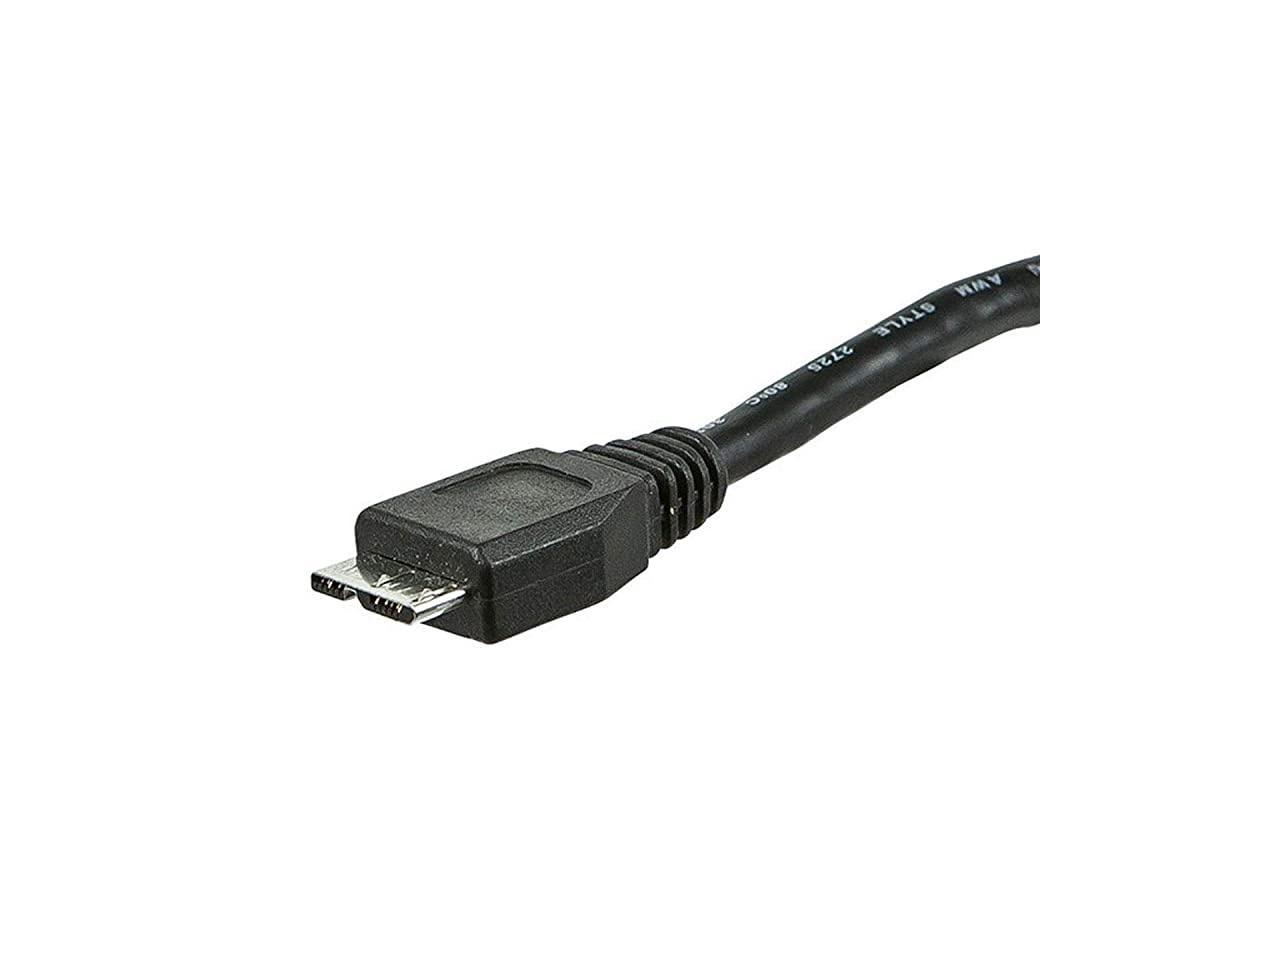 USB 30 Five Slot CFSDMSxDmicroSD and M2 Card Reader 109977 - Newegg.com